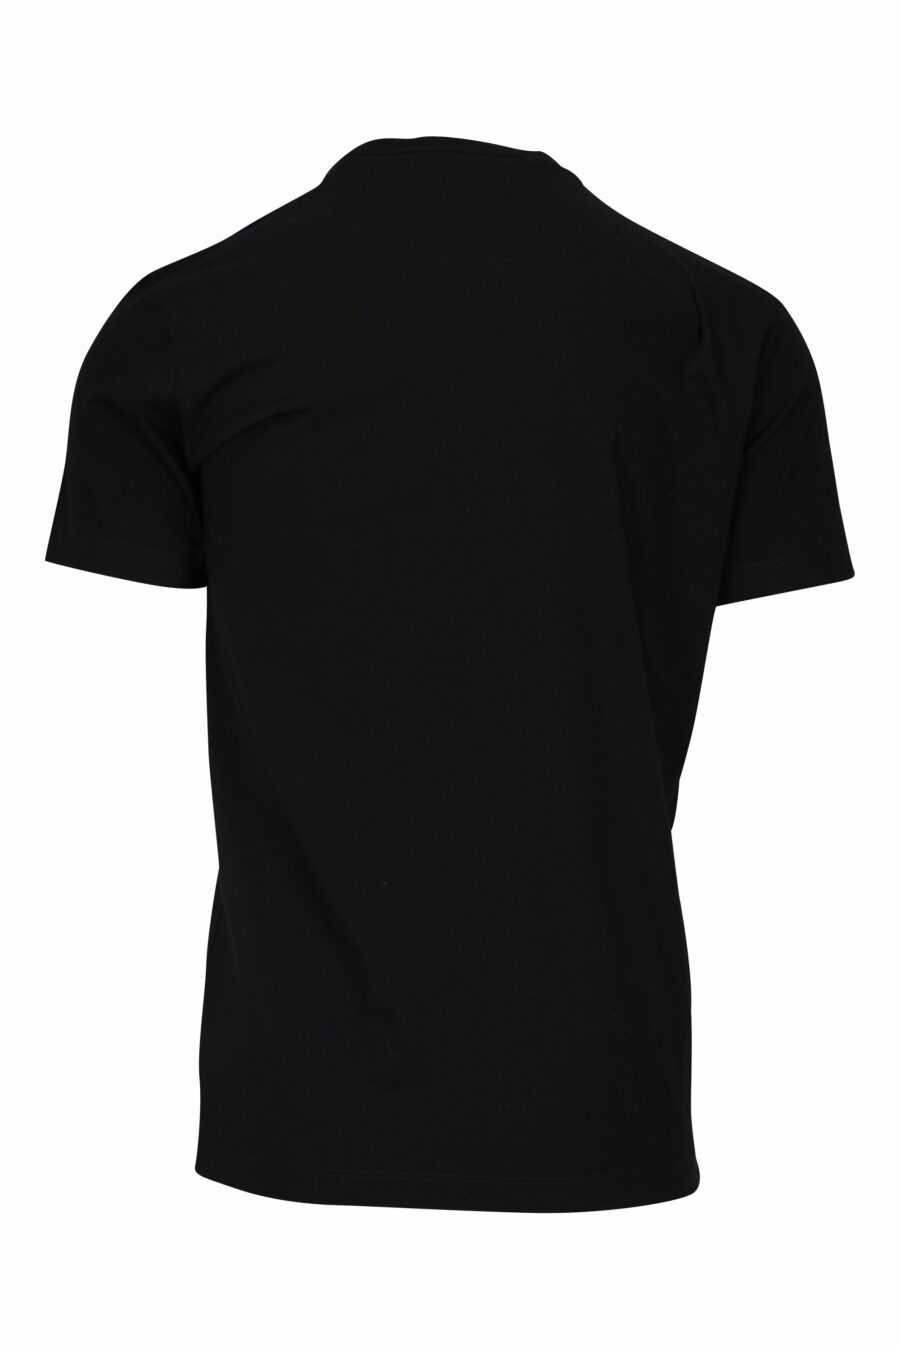 Black T-shirt with "sitckers" maxilogo - 8054148086725 1